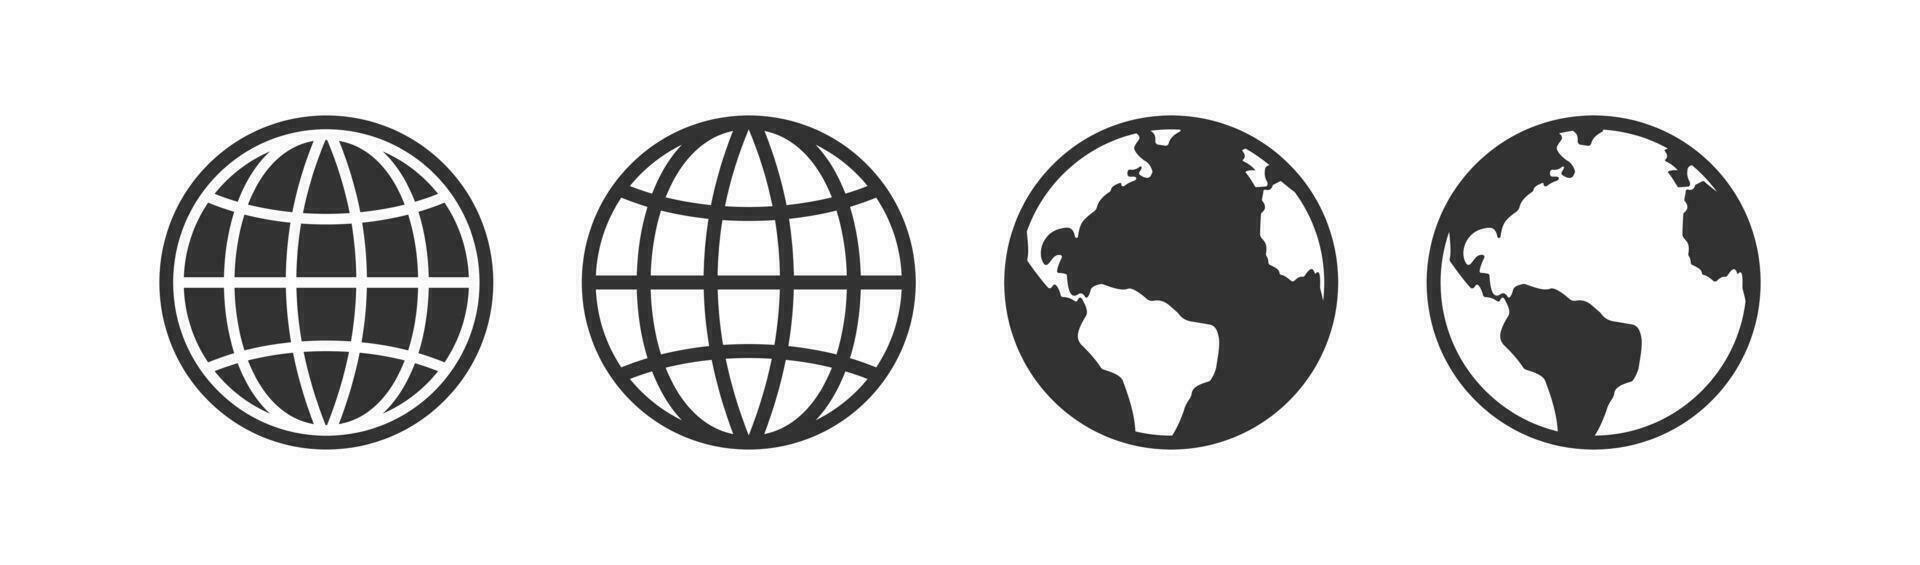 Globe icon. Internet symbol. World signs. Earth symbols. Global web ...